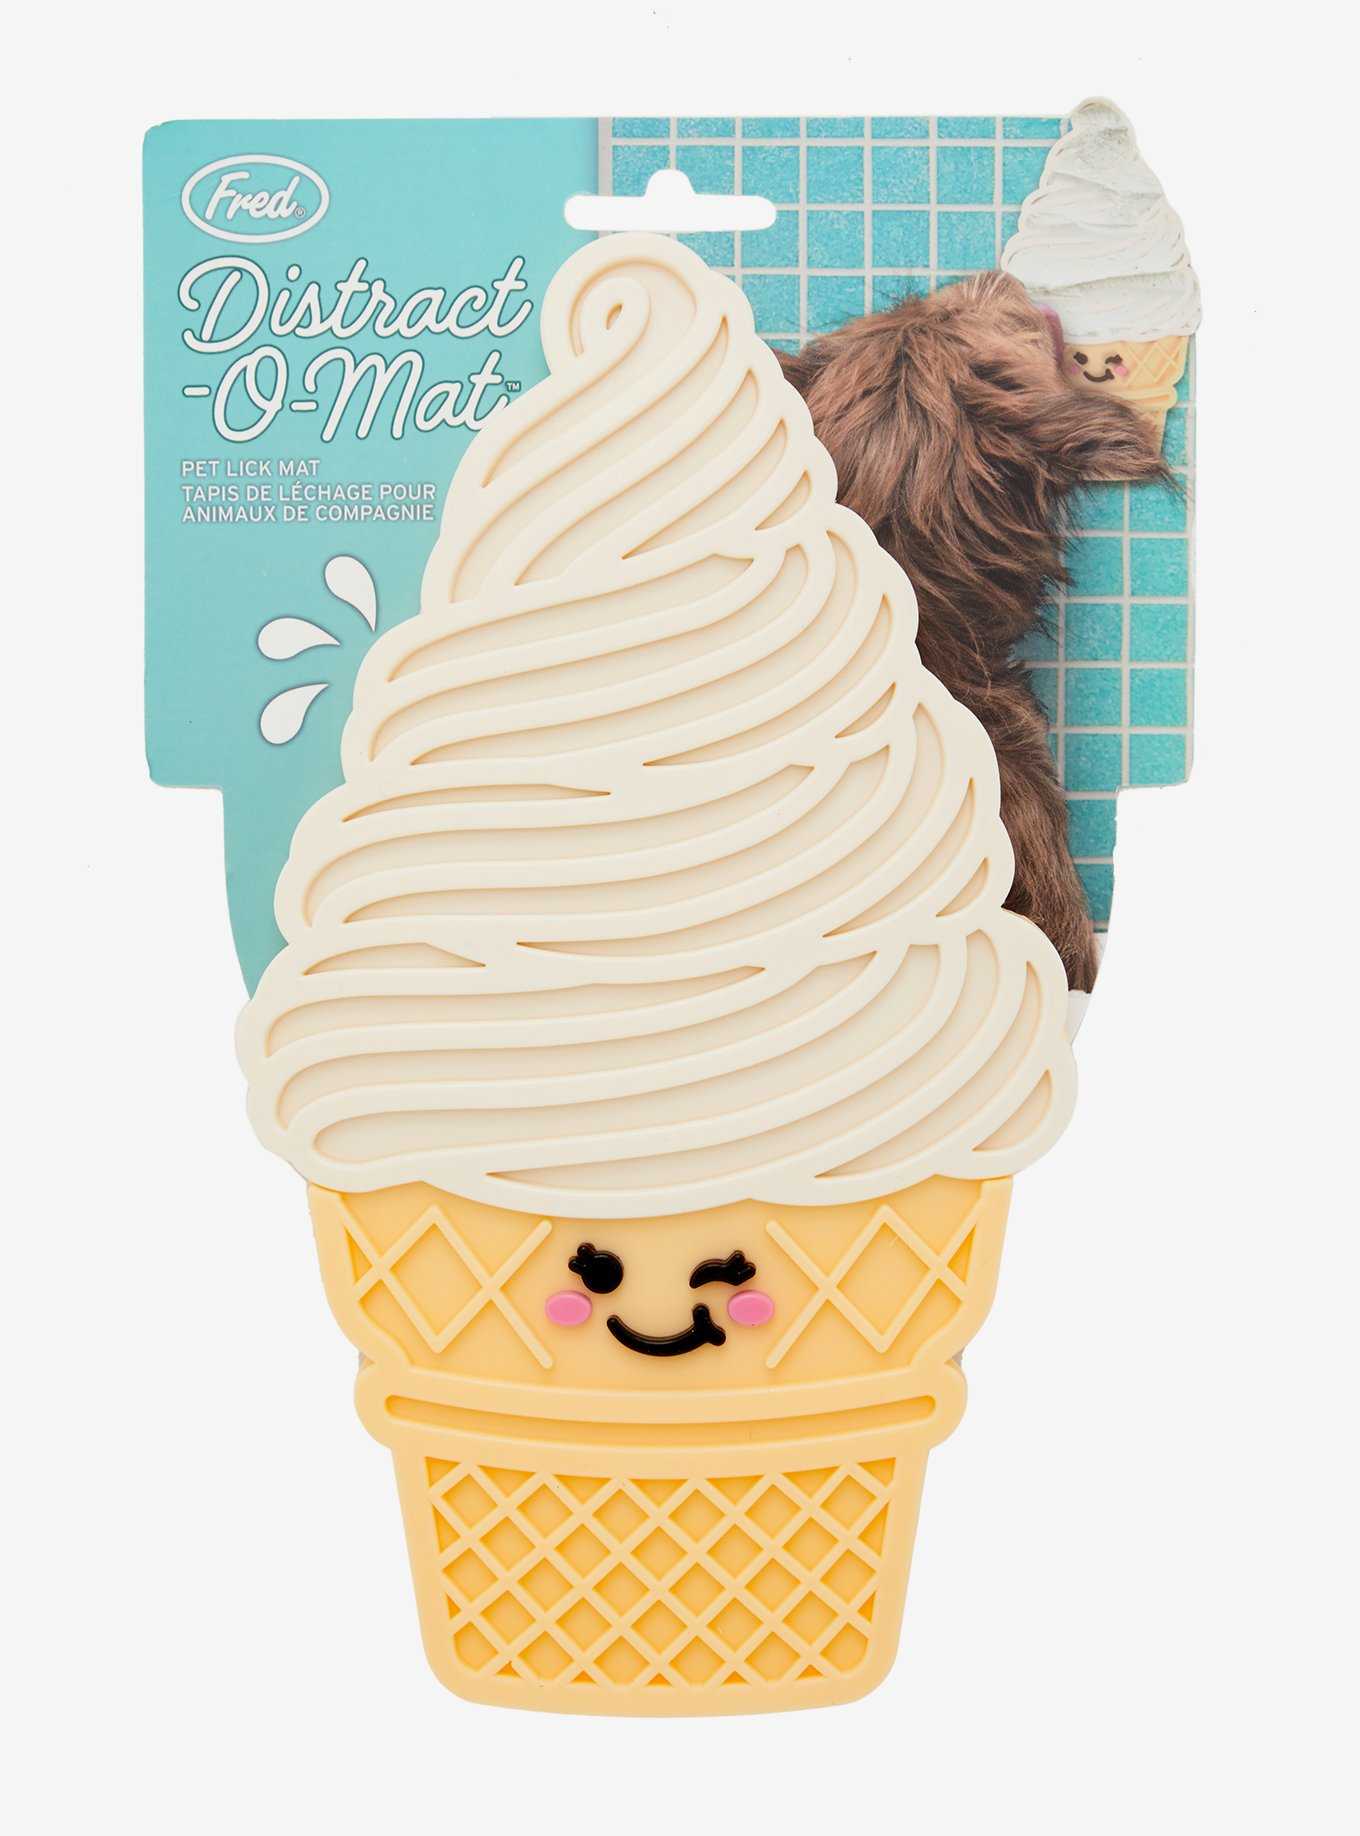 Fred Distract-o-Mat Ice Cream Cone Pet Lick Mat, , hi-res